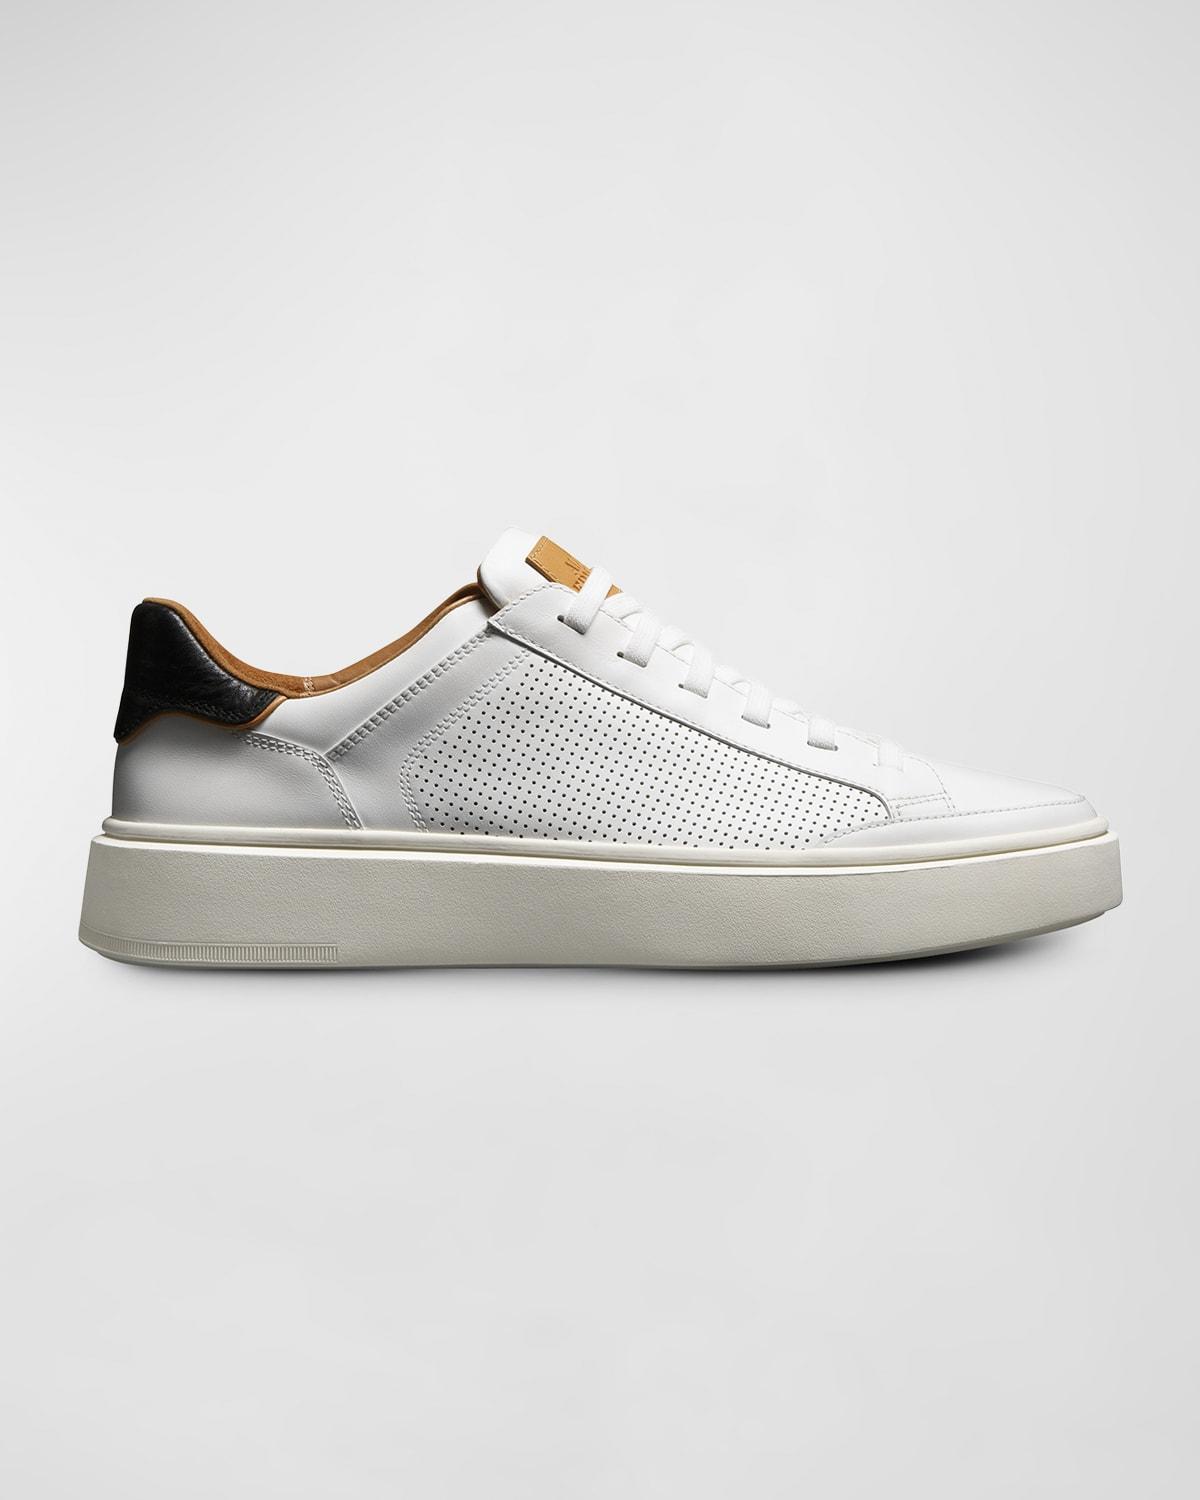 Allen Edmonds Oliver Sneaker Product Image